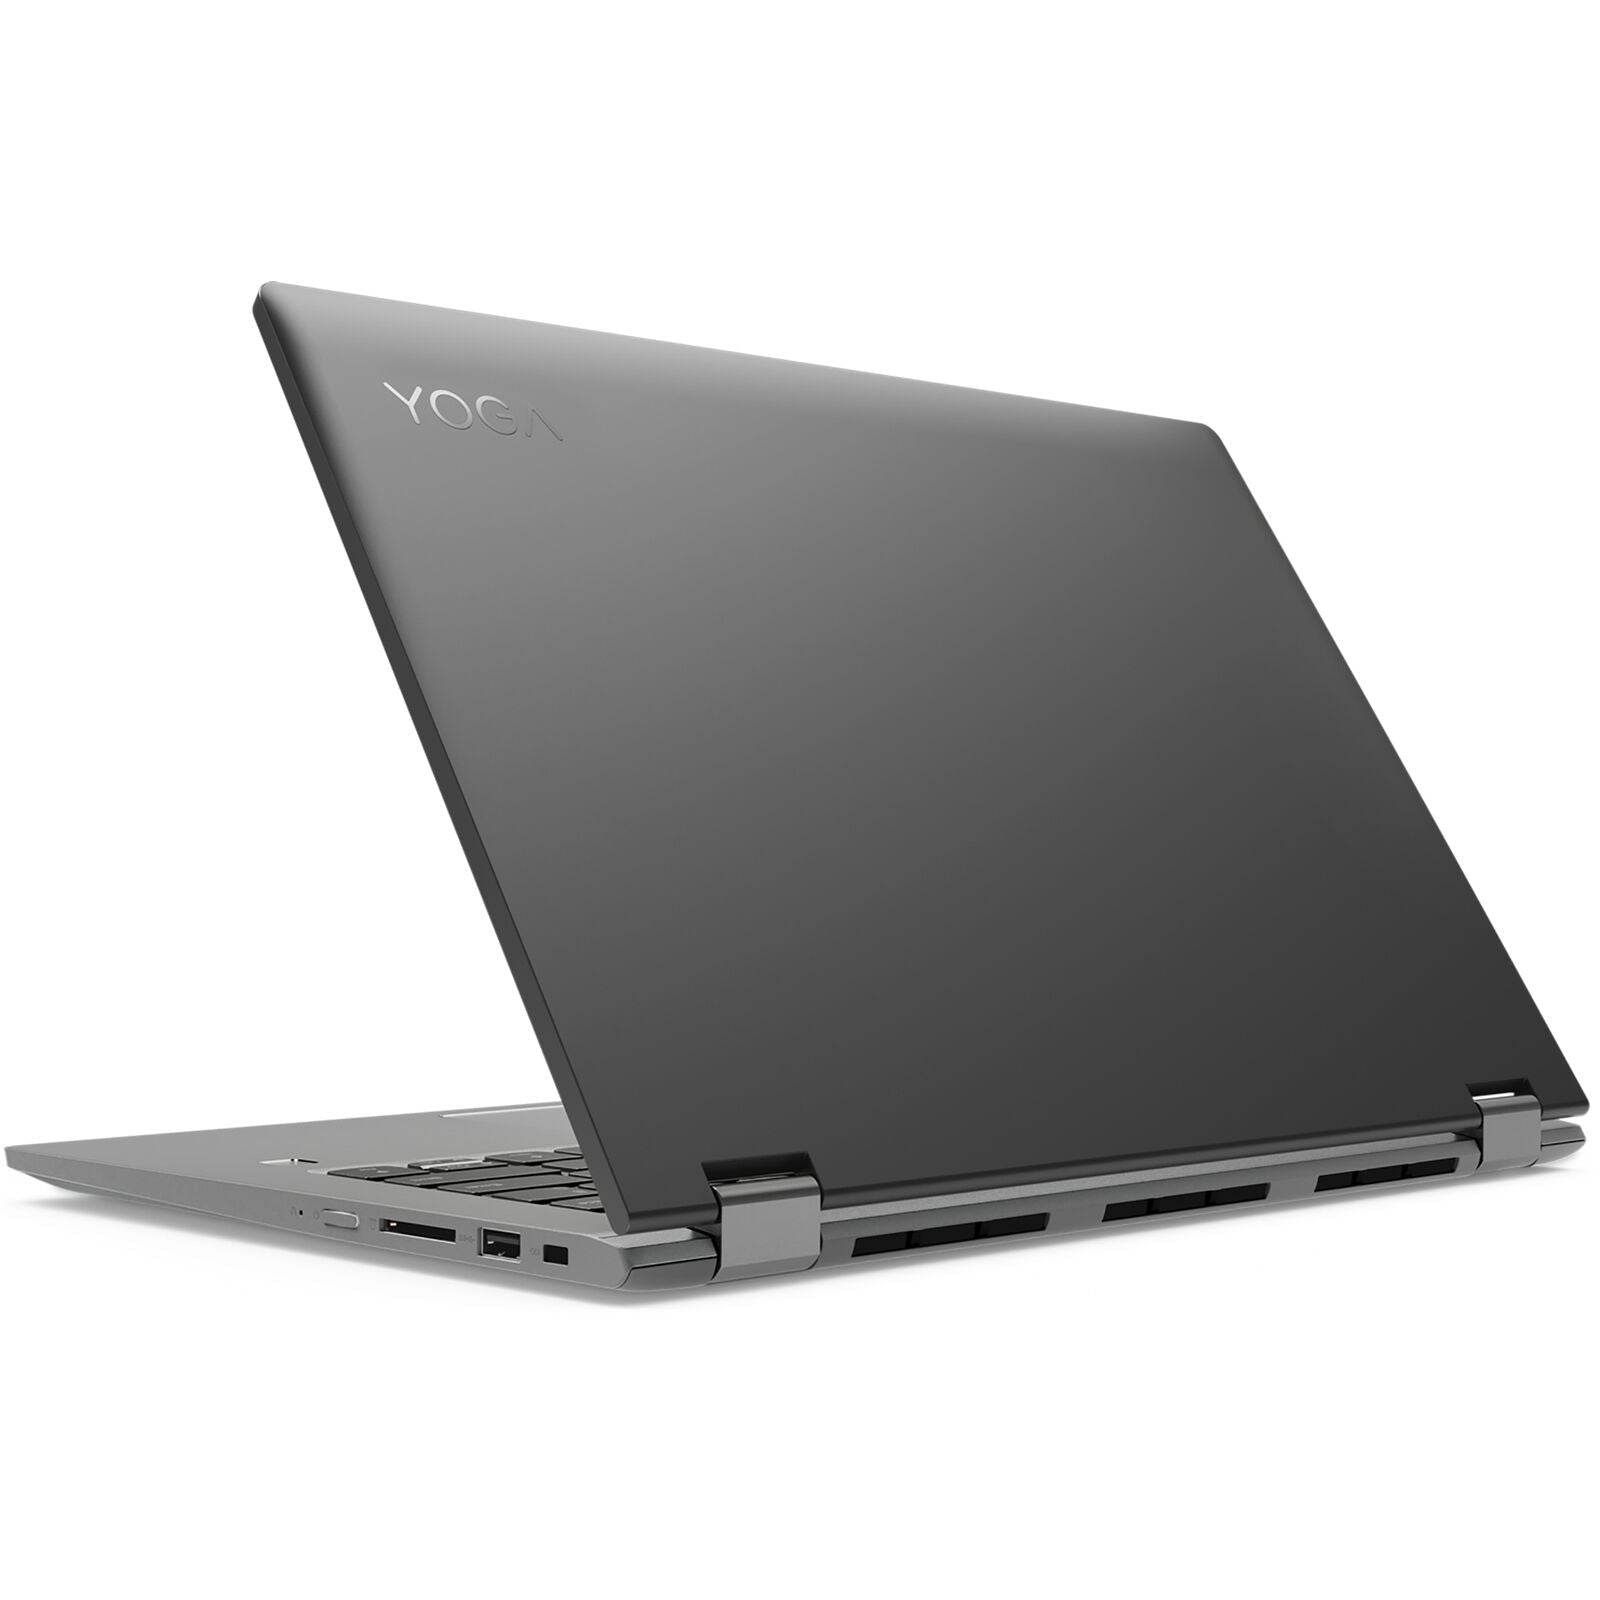 Lenovo Yoga 530-14ARR (81H90002UK) AMD Ryzen 5, 8GB, 256GB, Black - Refurbished Good